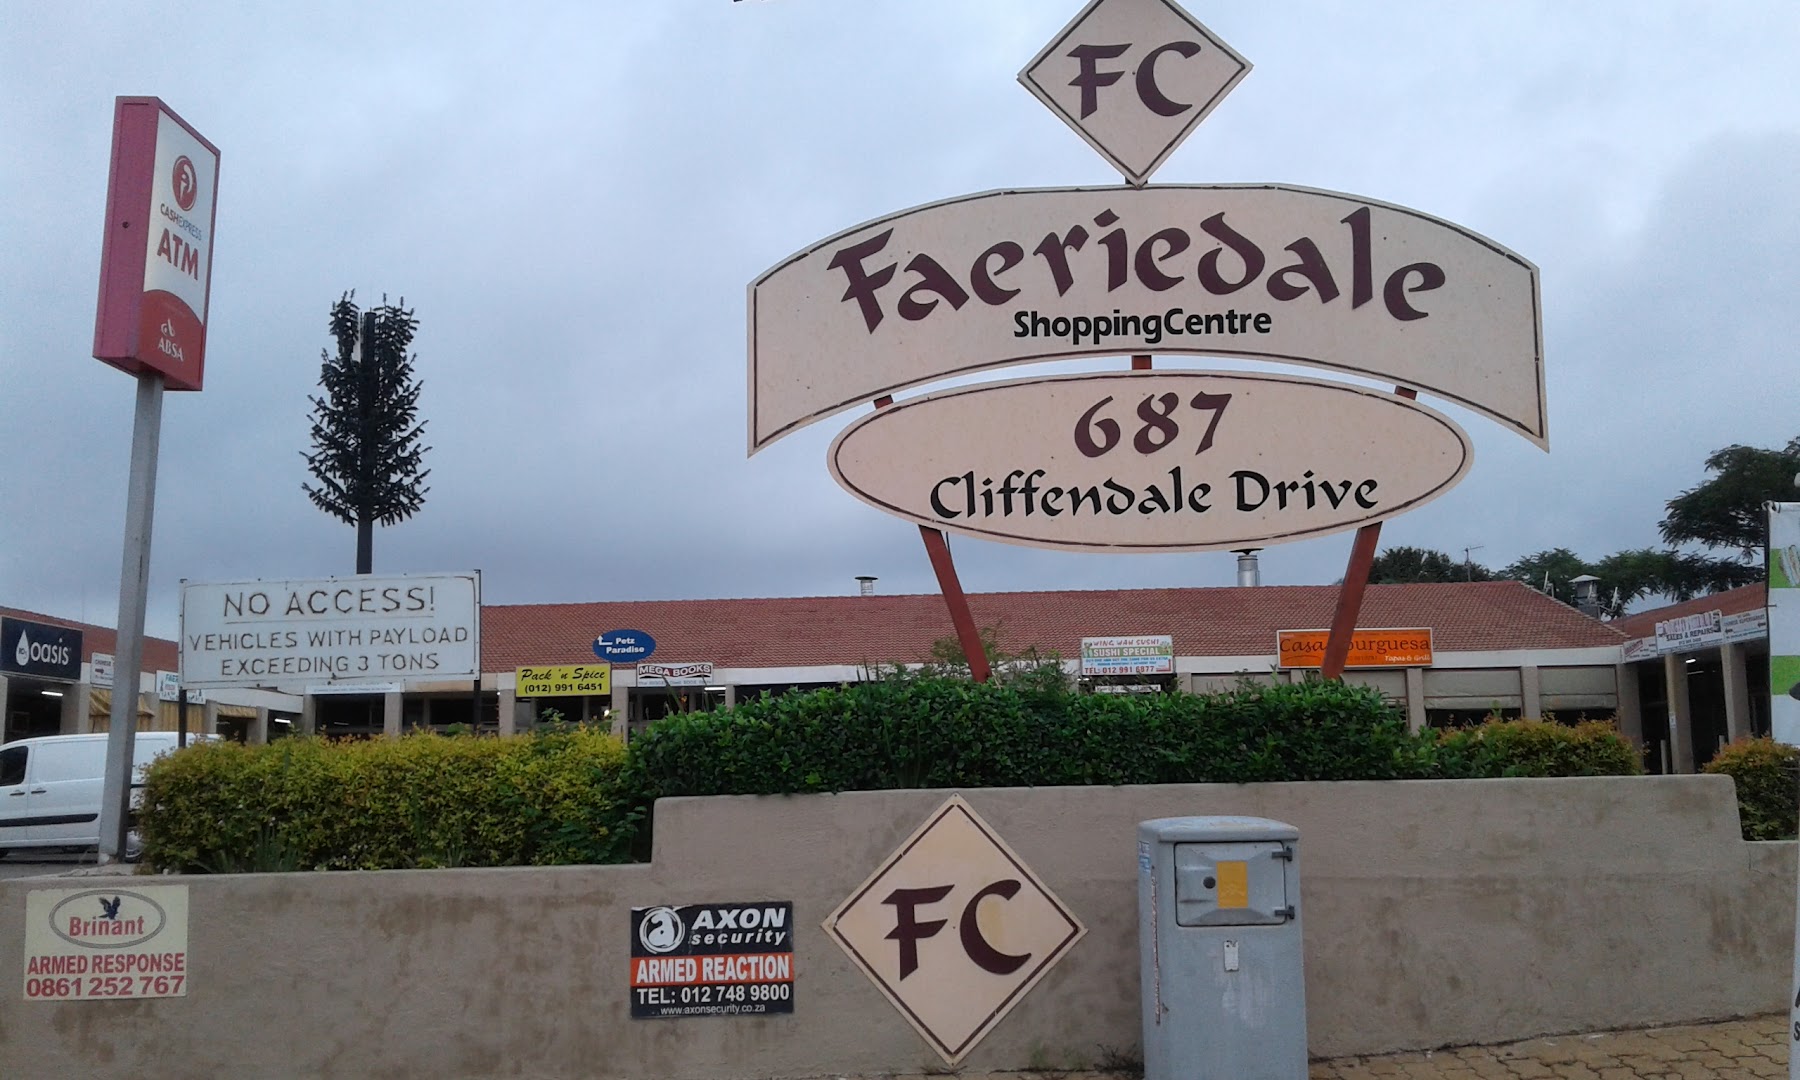 Faeriedale Shopping Centre